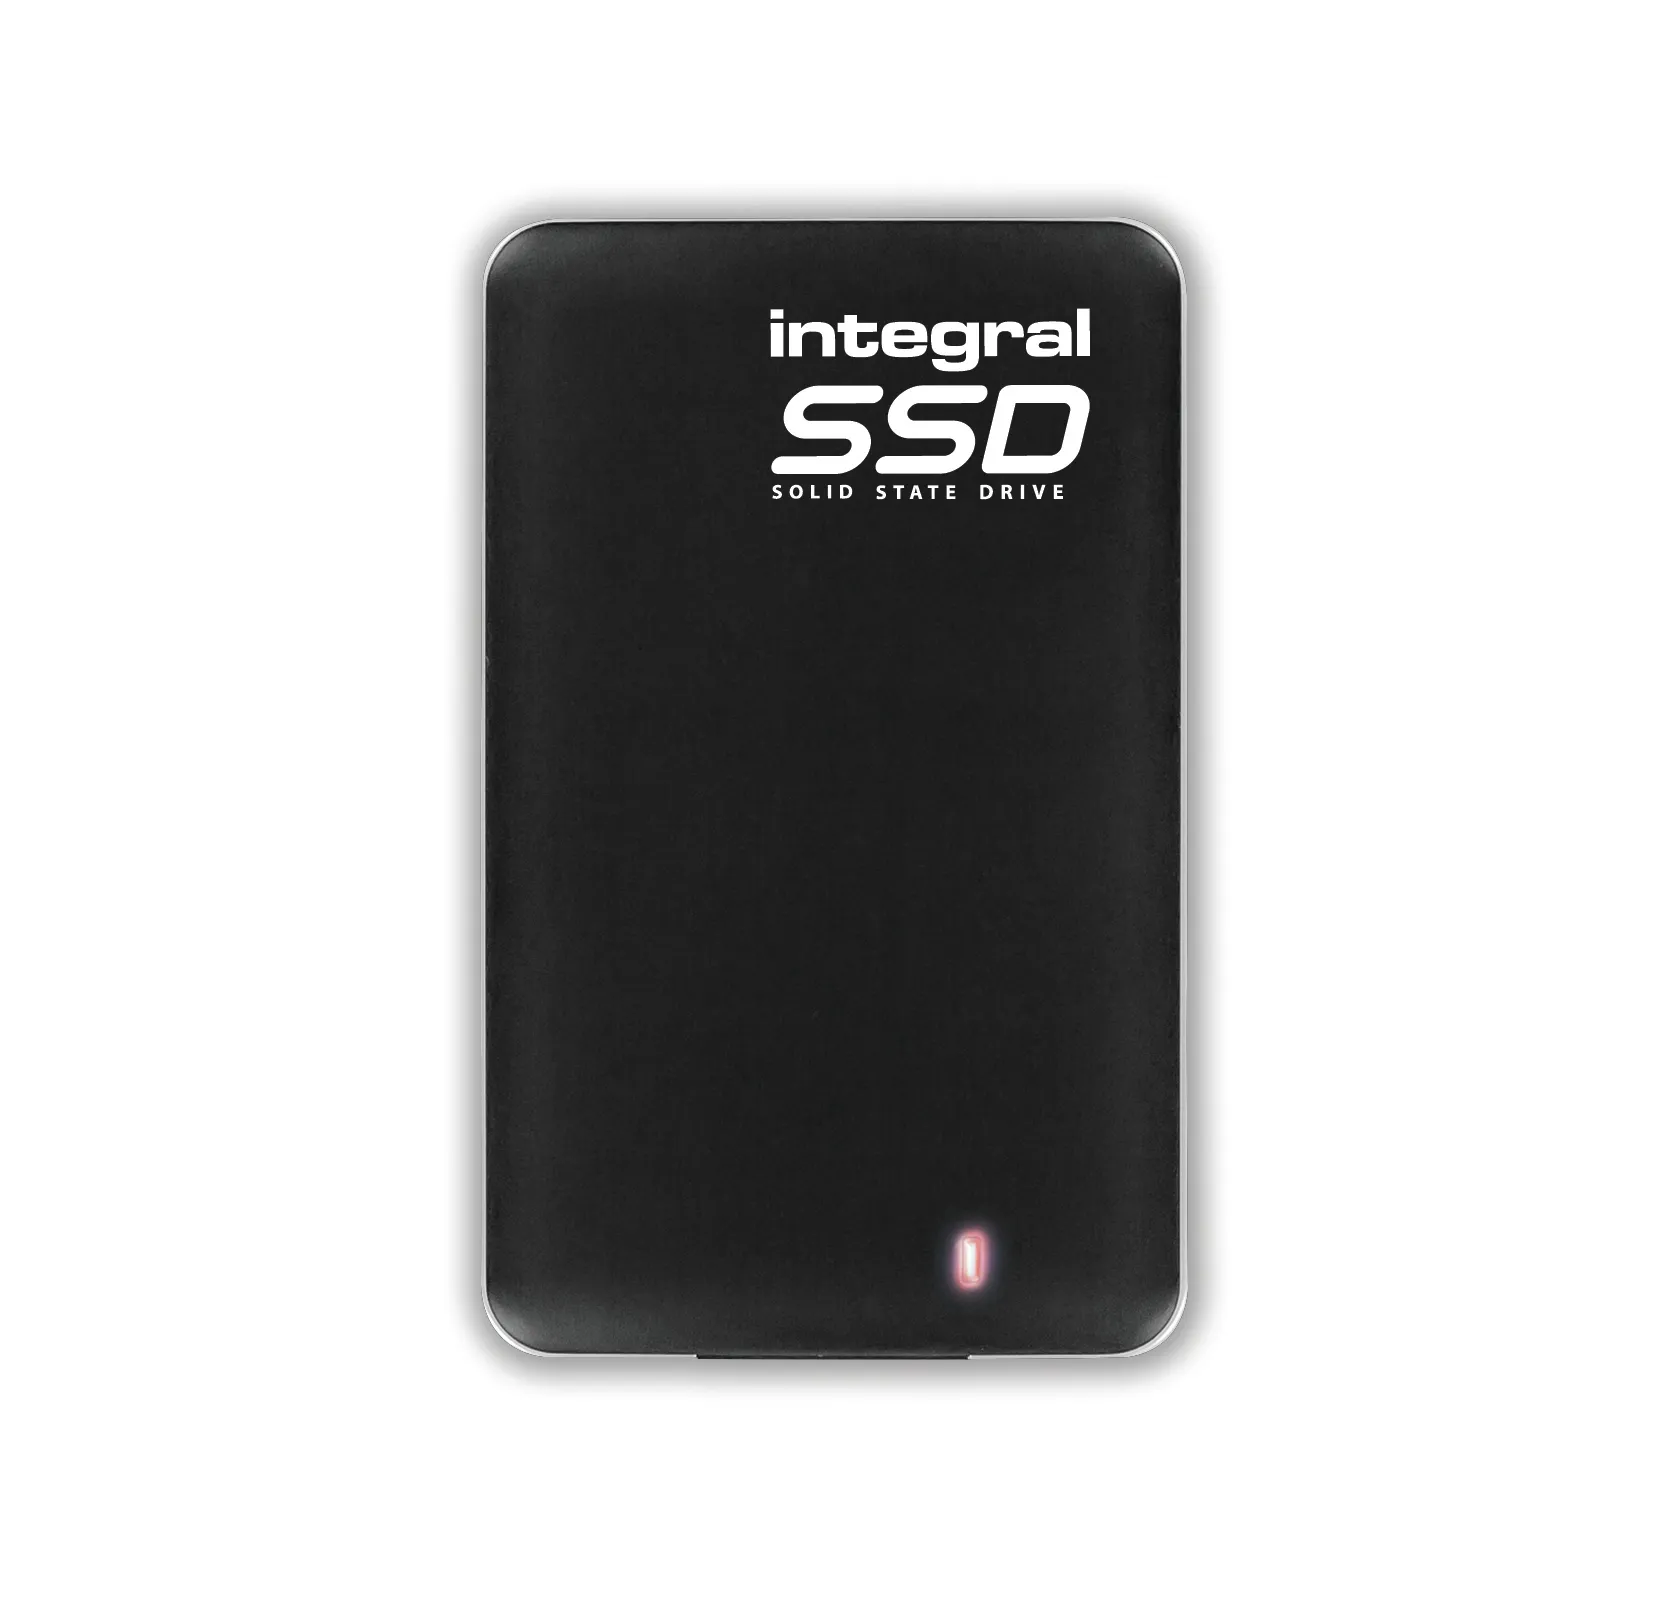 Vente Integral 960GB USB 3.0 Portable SSD External Integral au meilleur prix - visuel 2